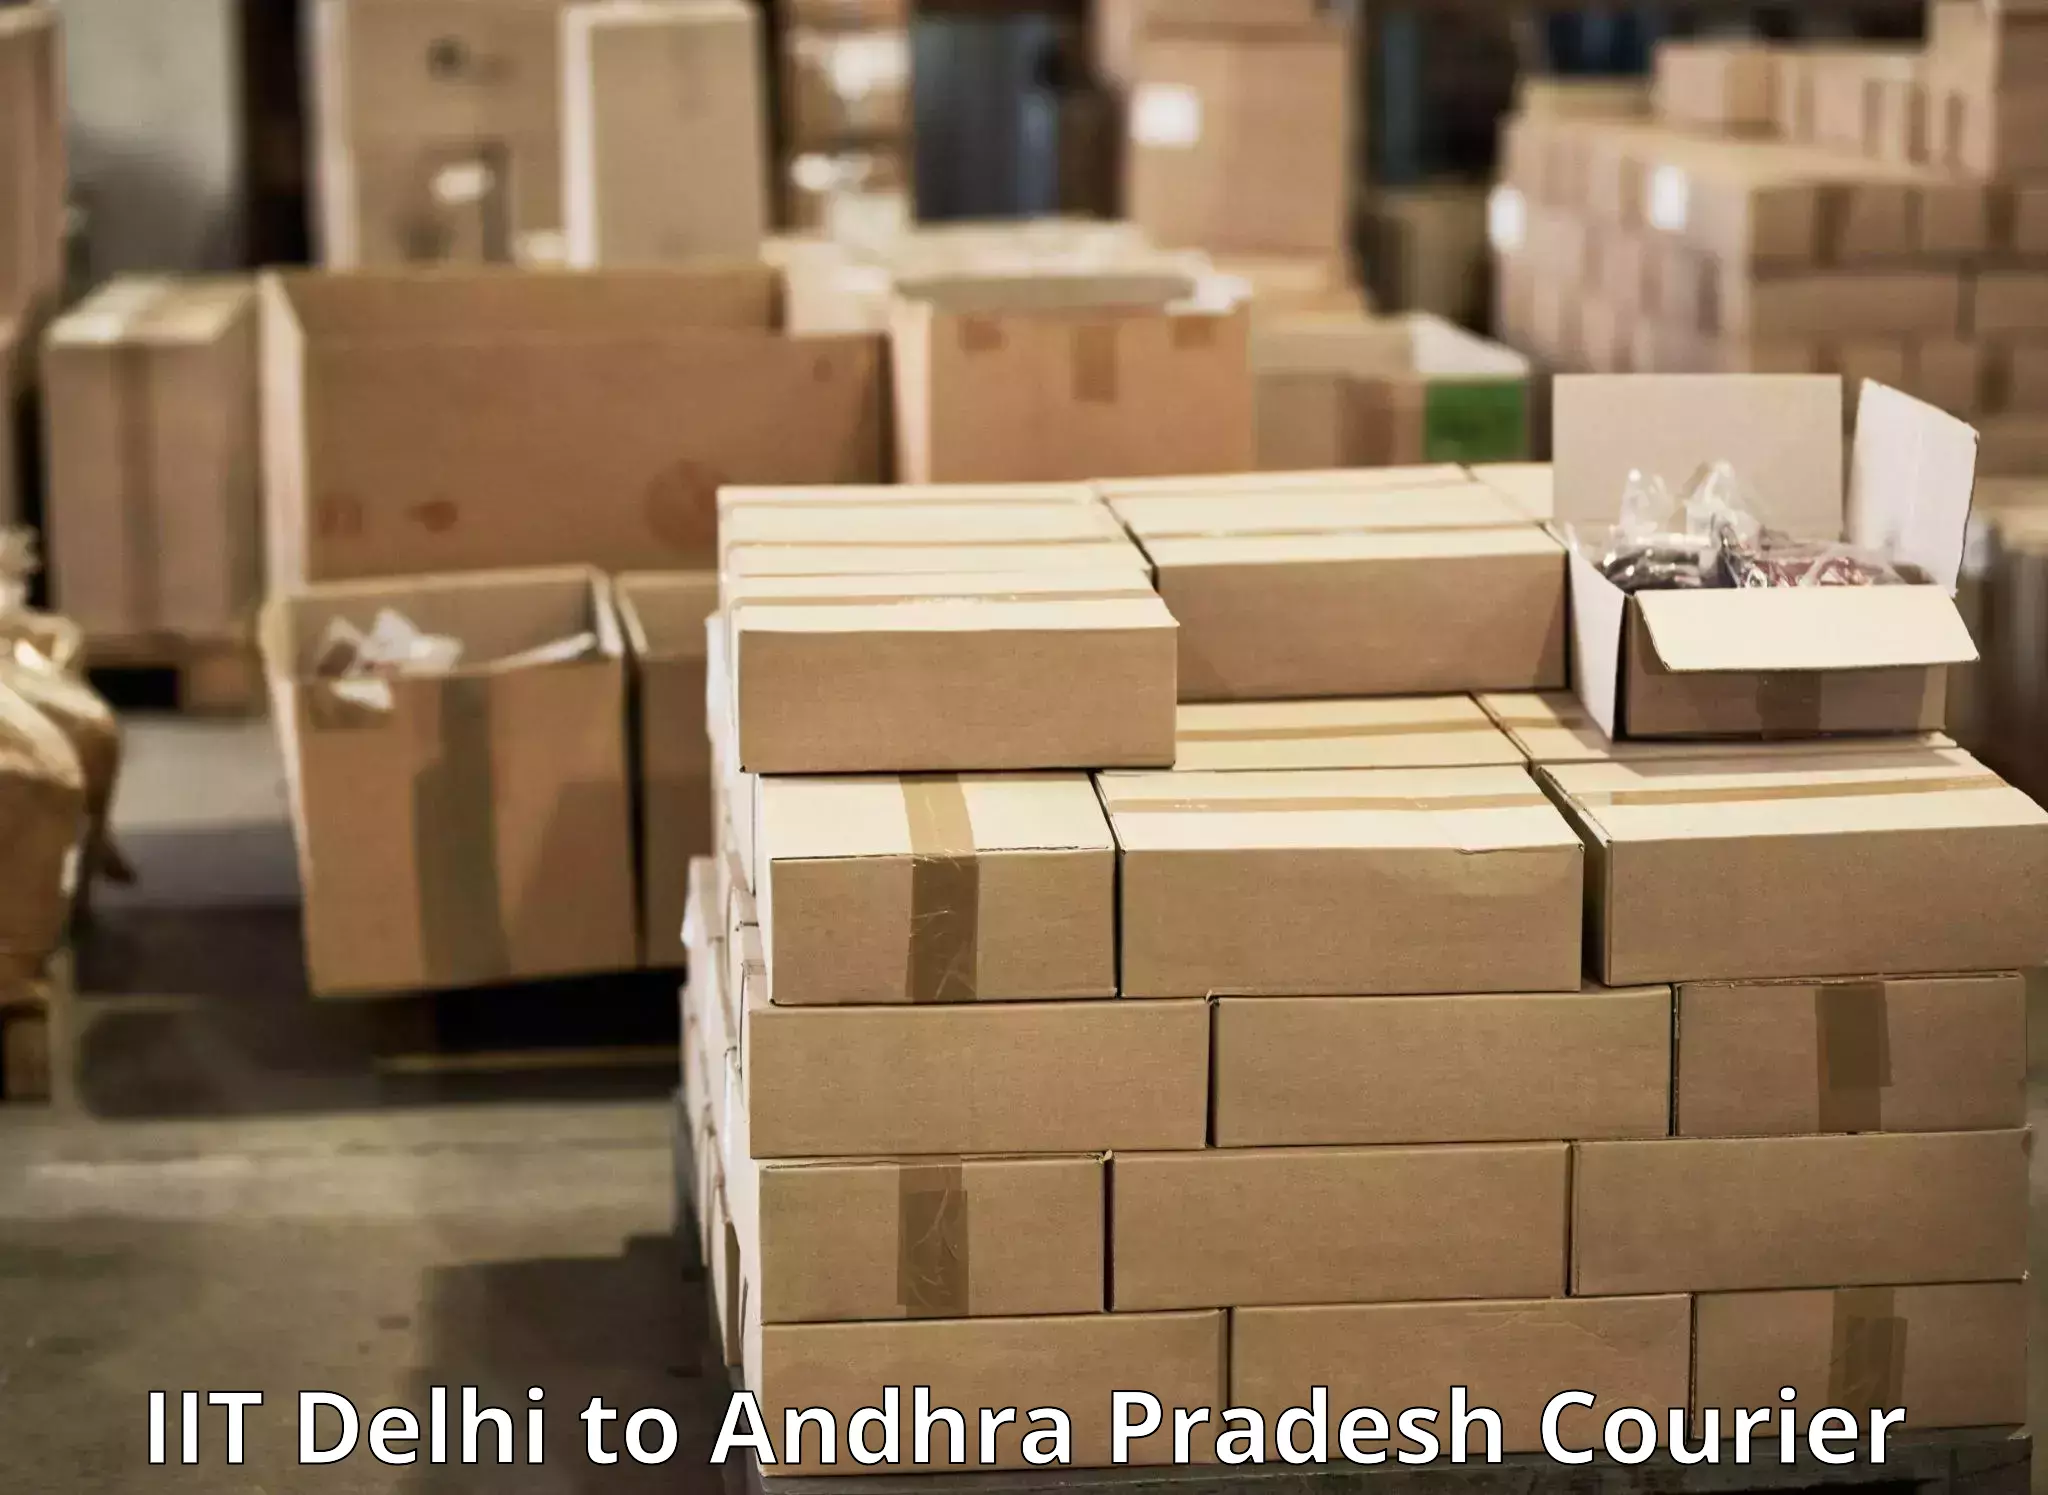 Courier service innovation IIT Delhi to Gajapathinagaram